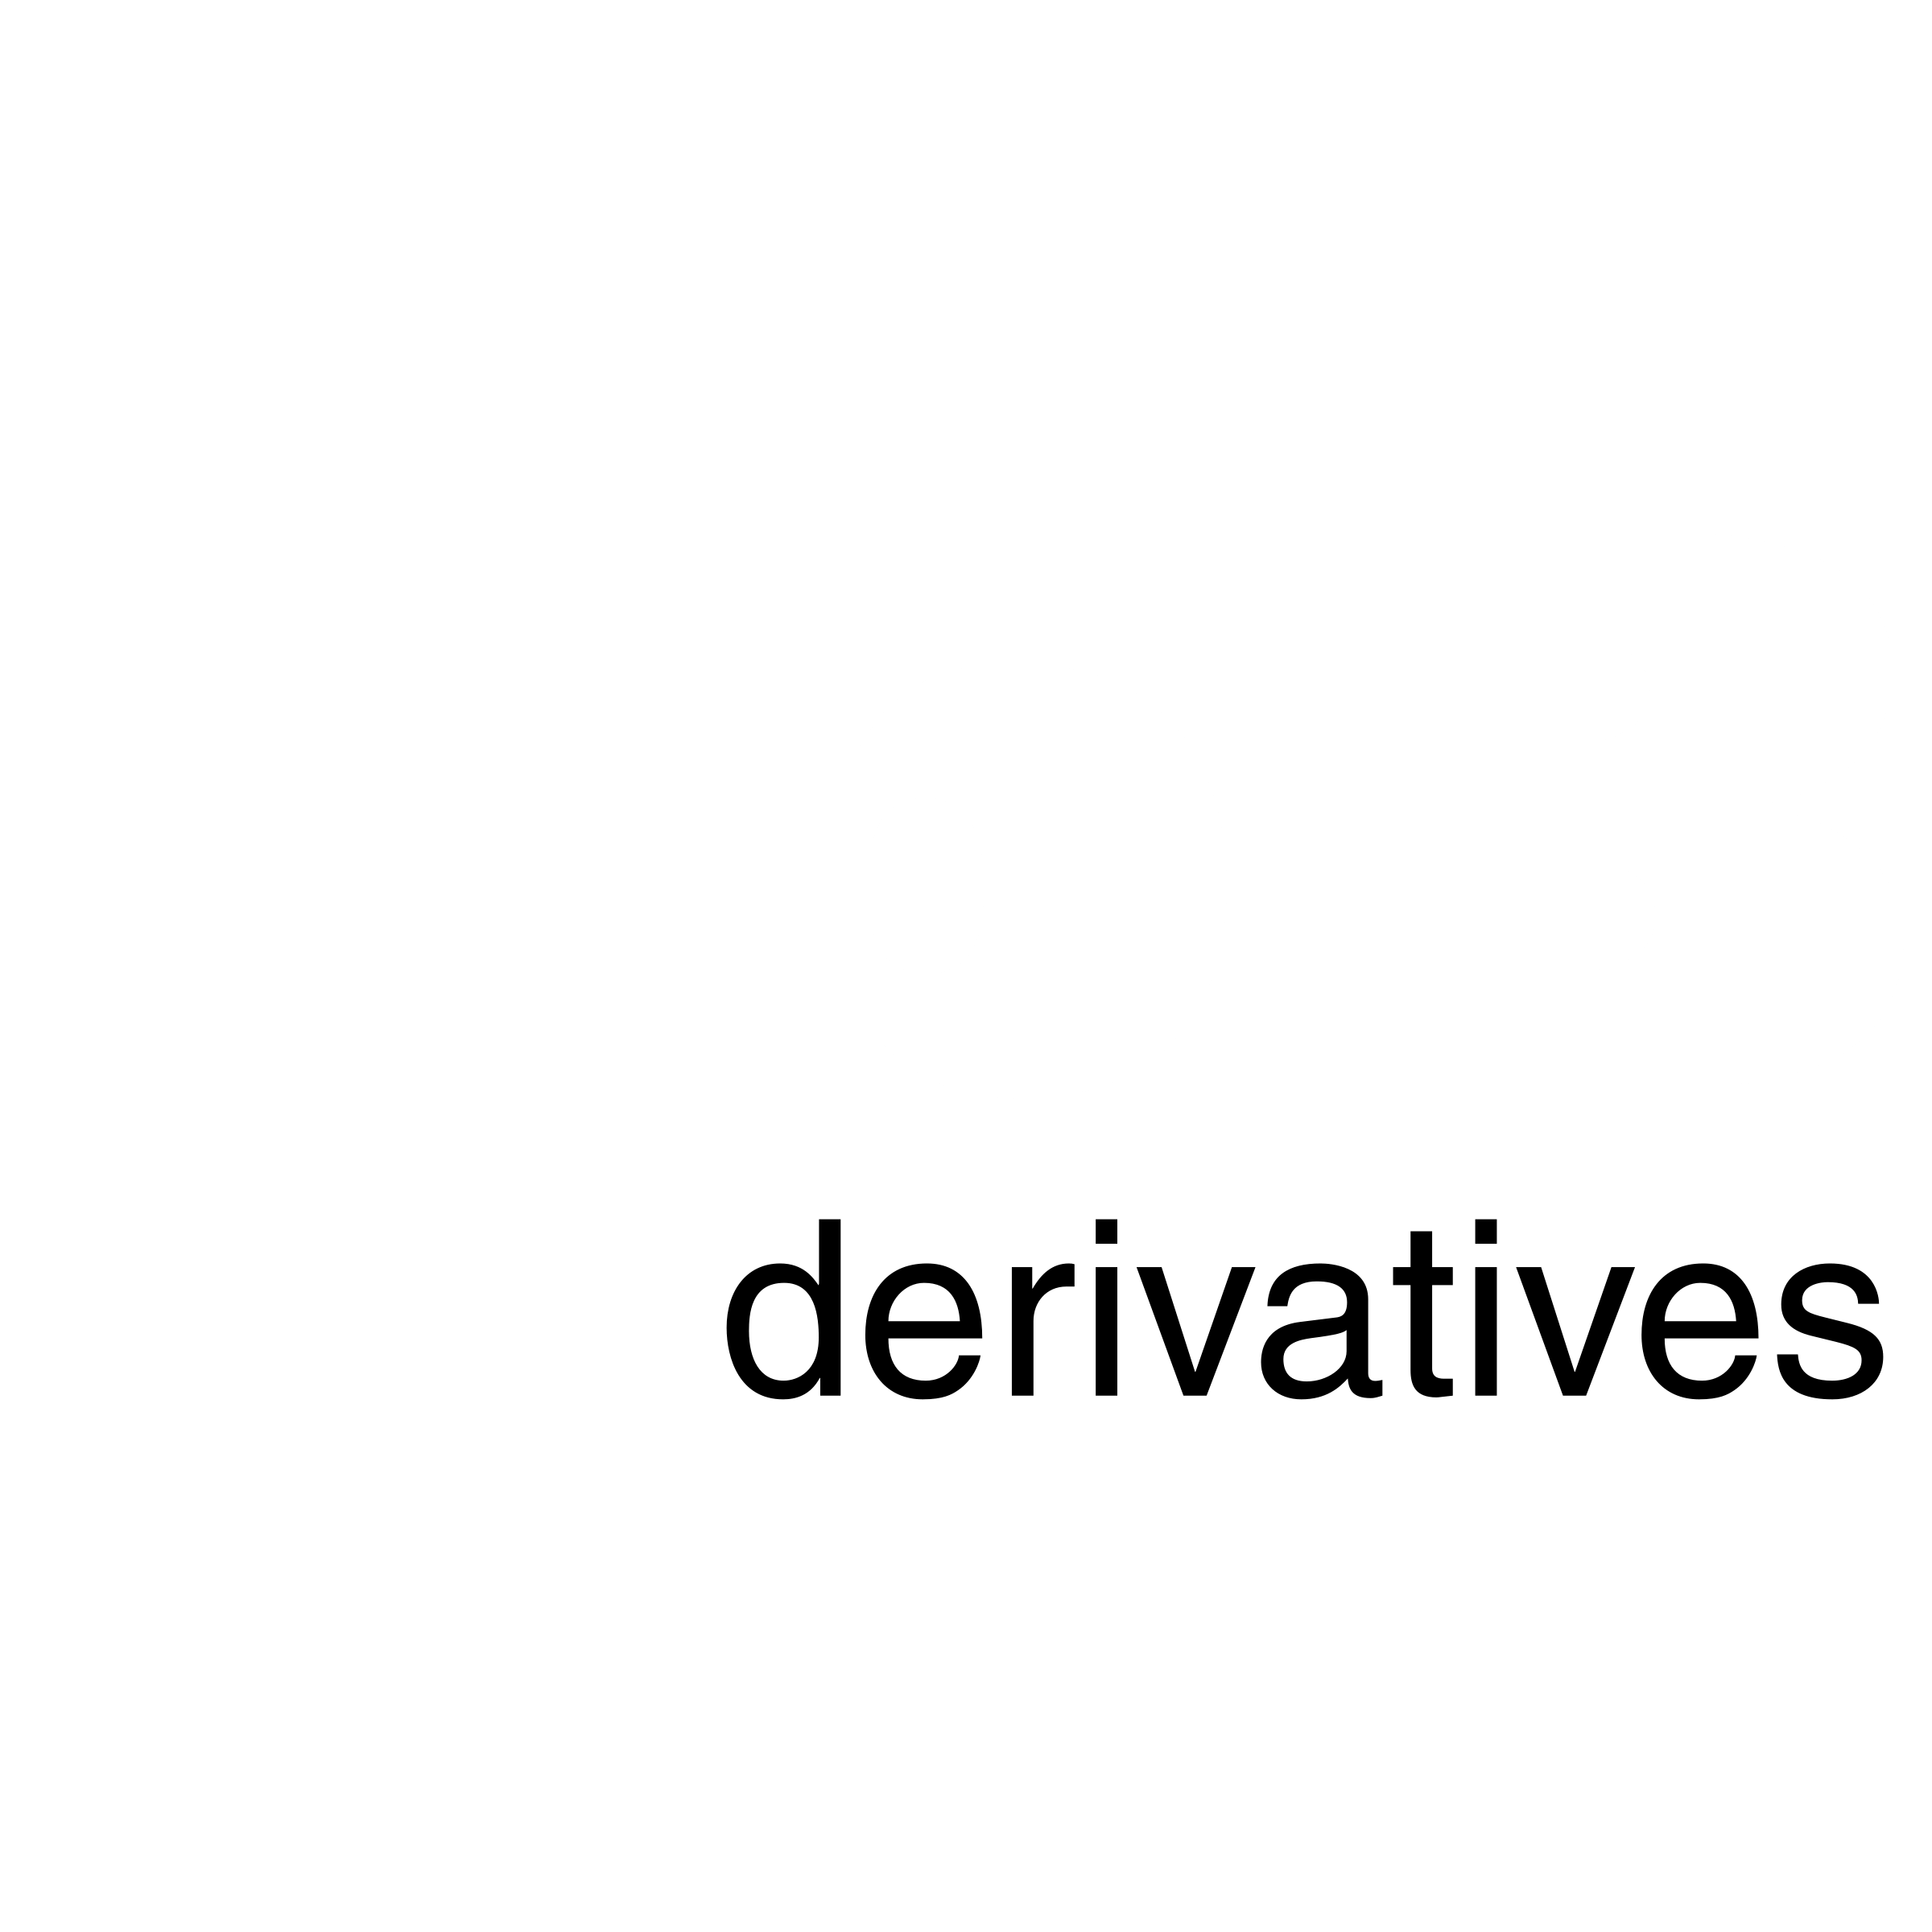 EPB Logo - EpB Logo PNG Transparent & SVG Vector - Freebie Supply